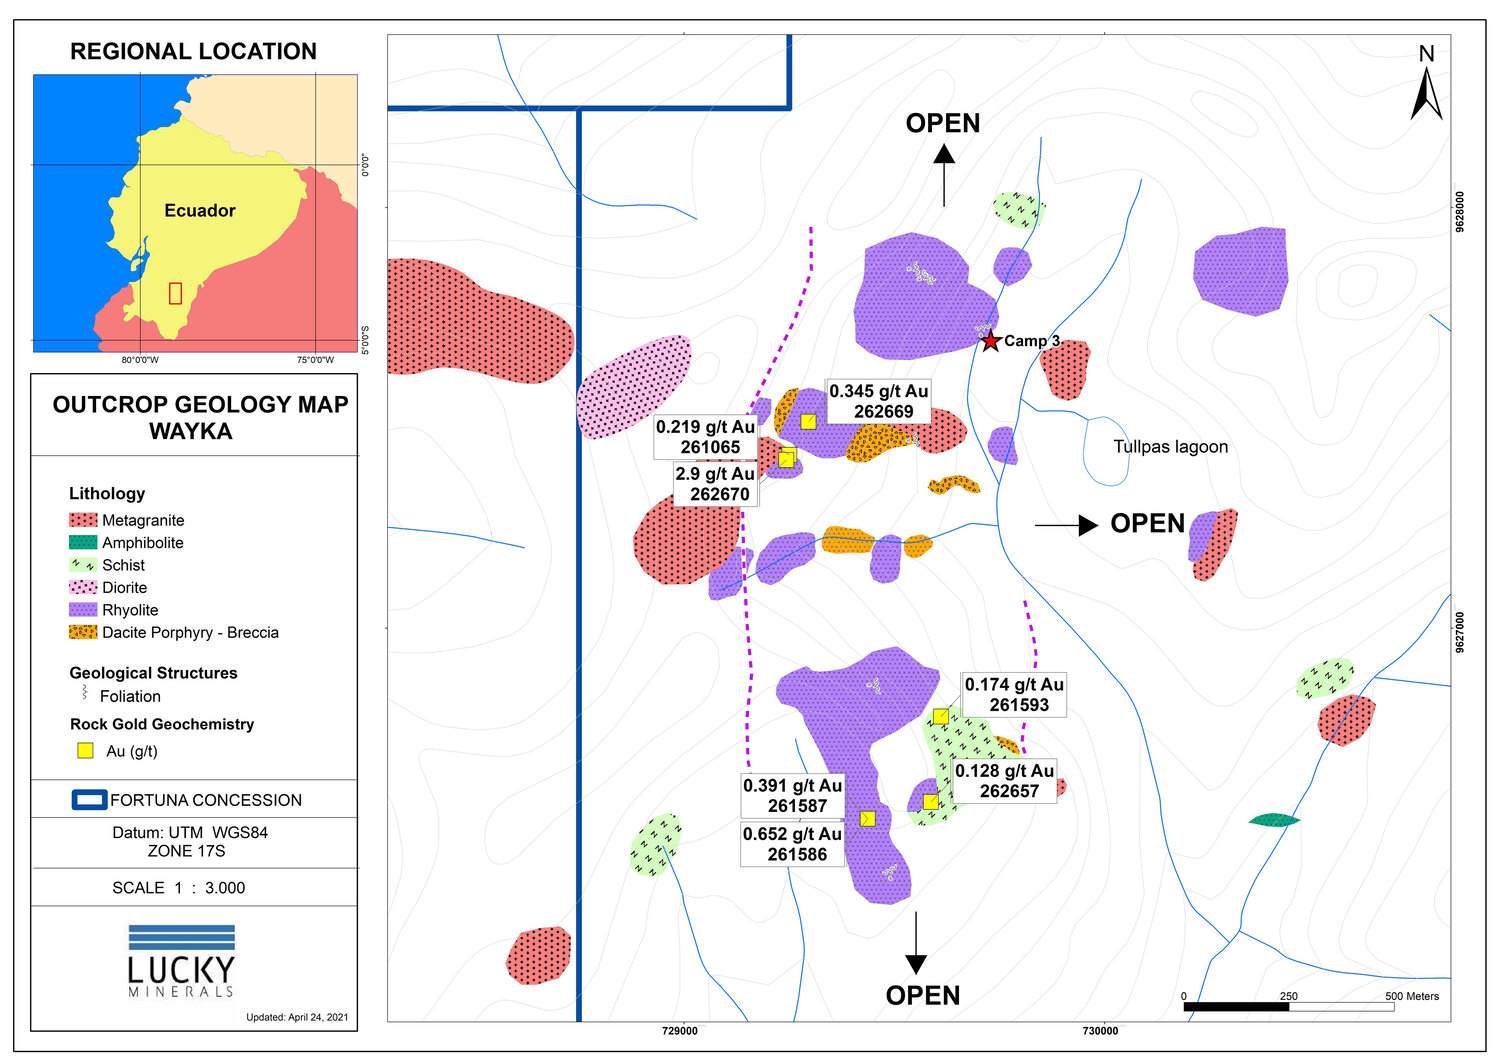 Updated Outcrop Geology Map  Wayka.